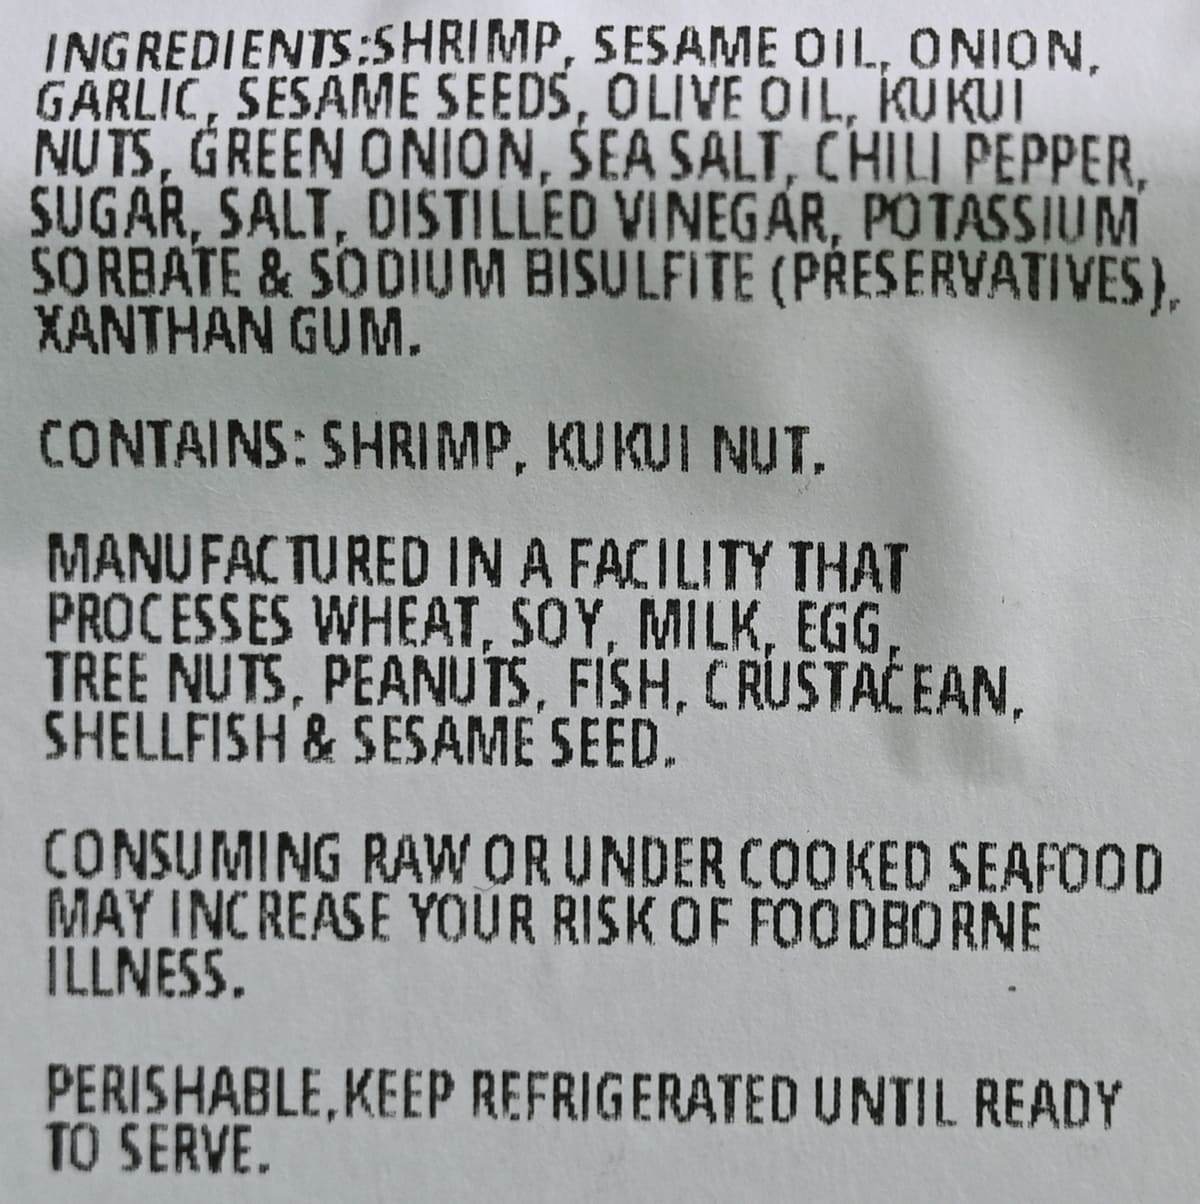 Image of the Garlic Shrimp Poke ingredients list.